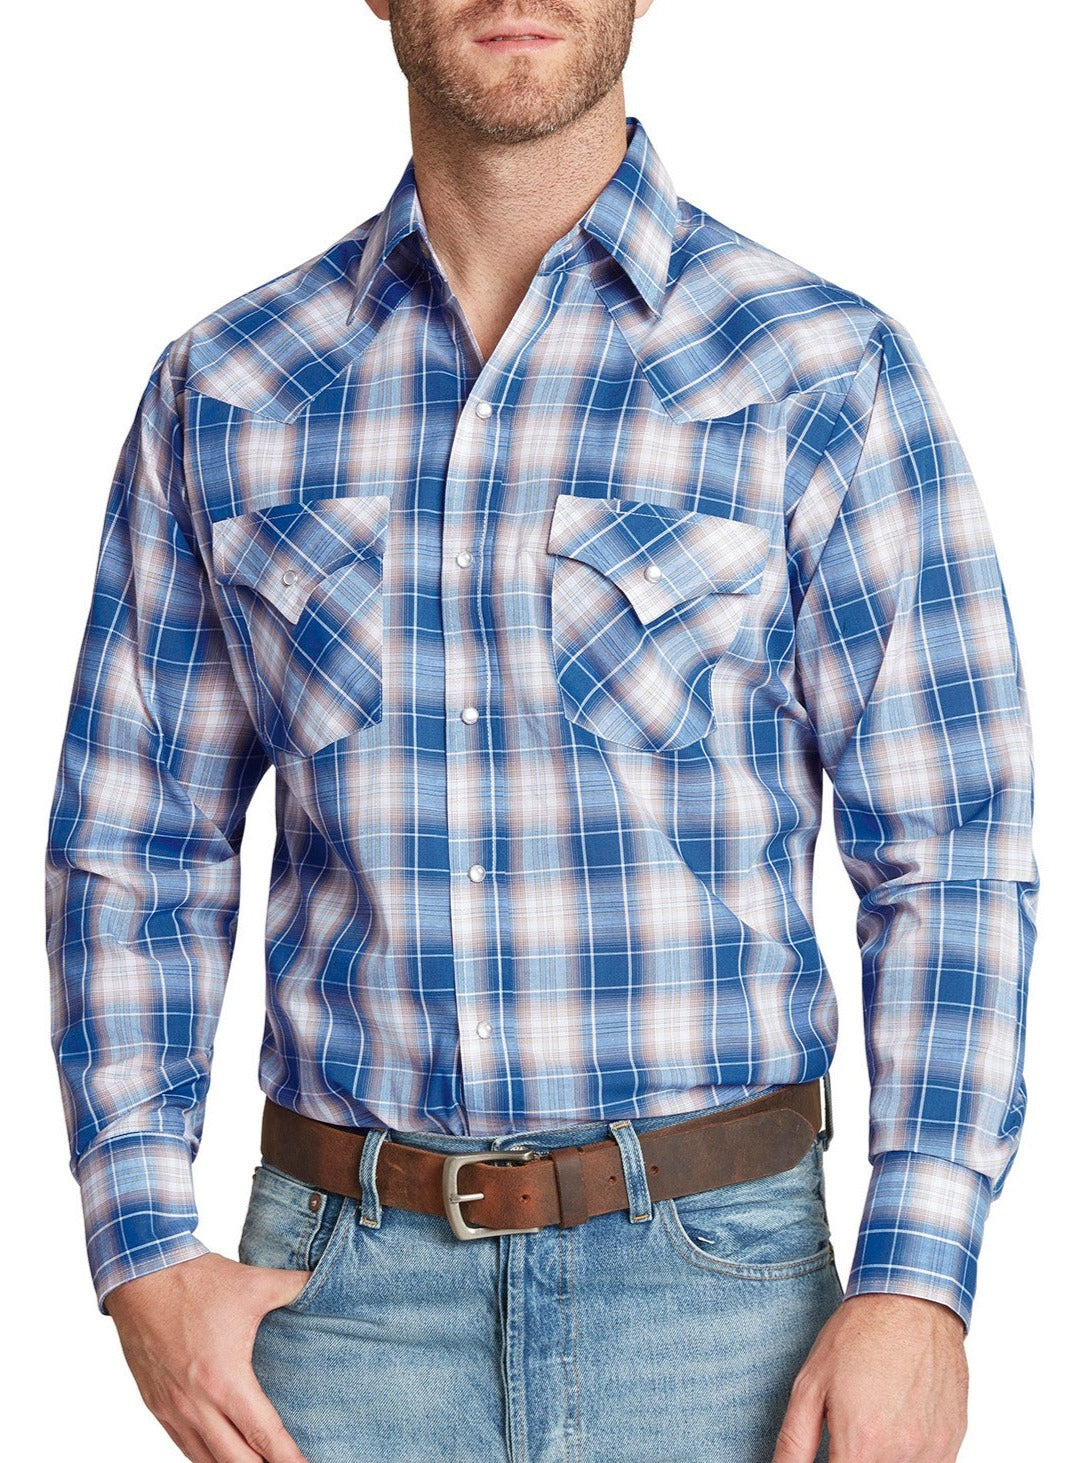 Men's Ely Cattleman Long Sleeve Western Snap Plaid Shirt